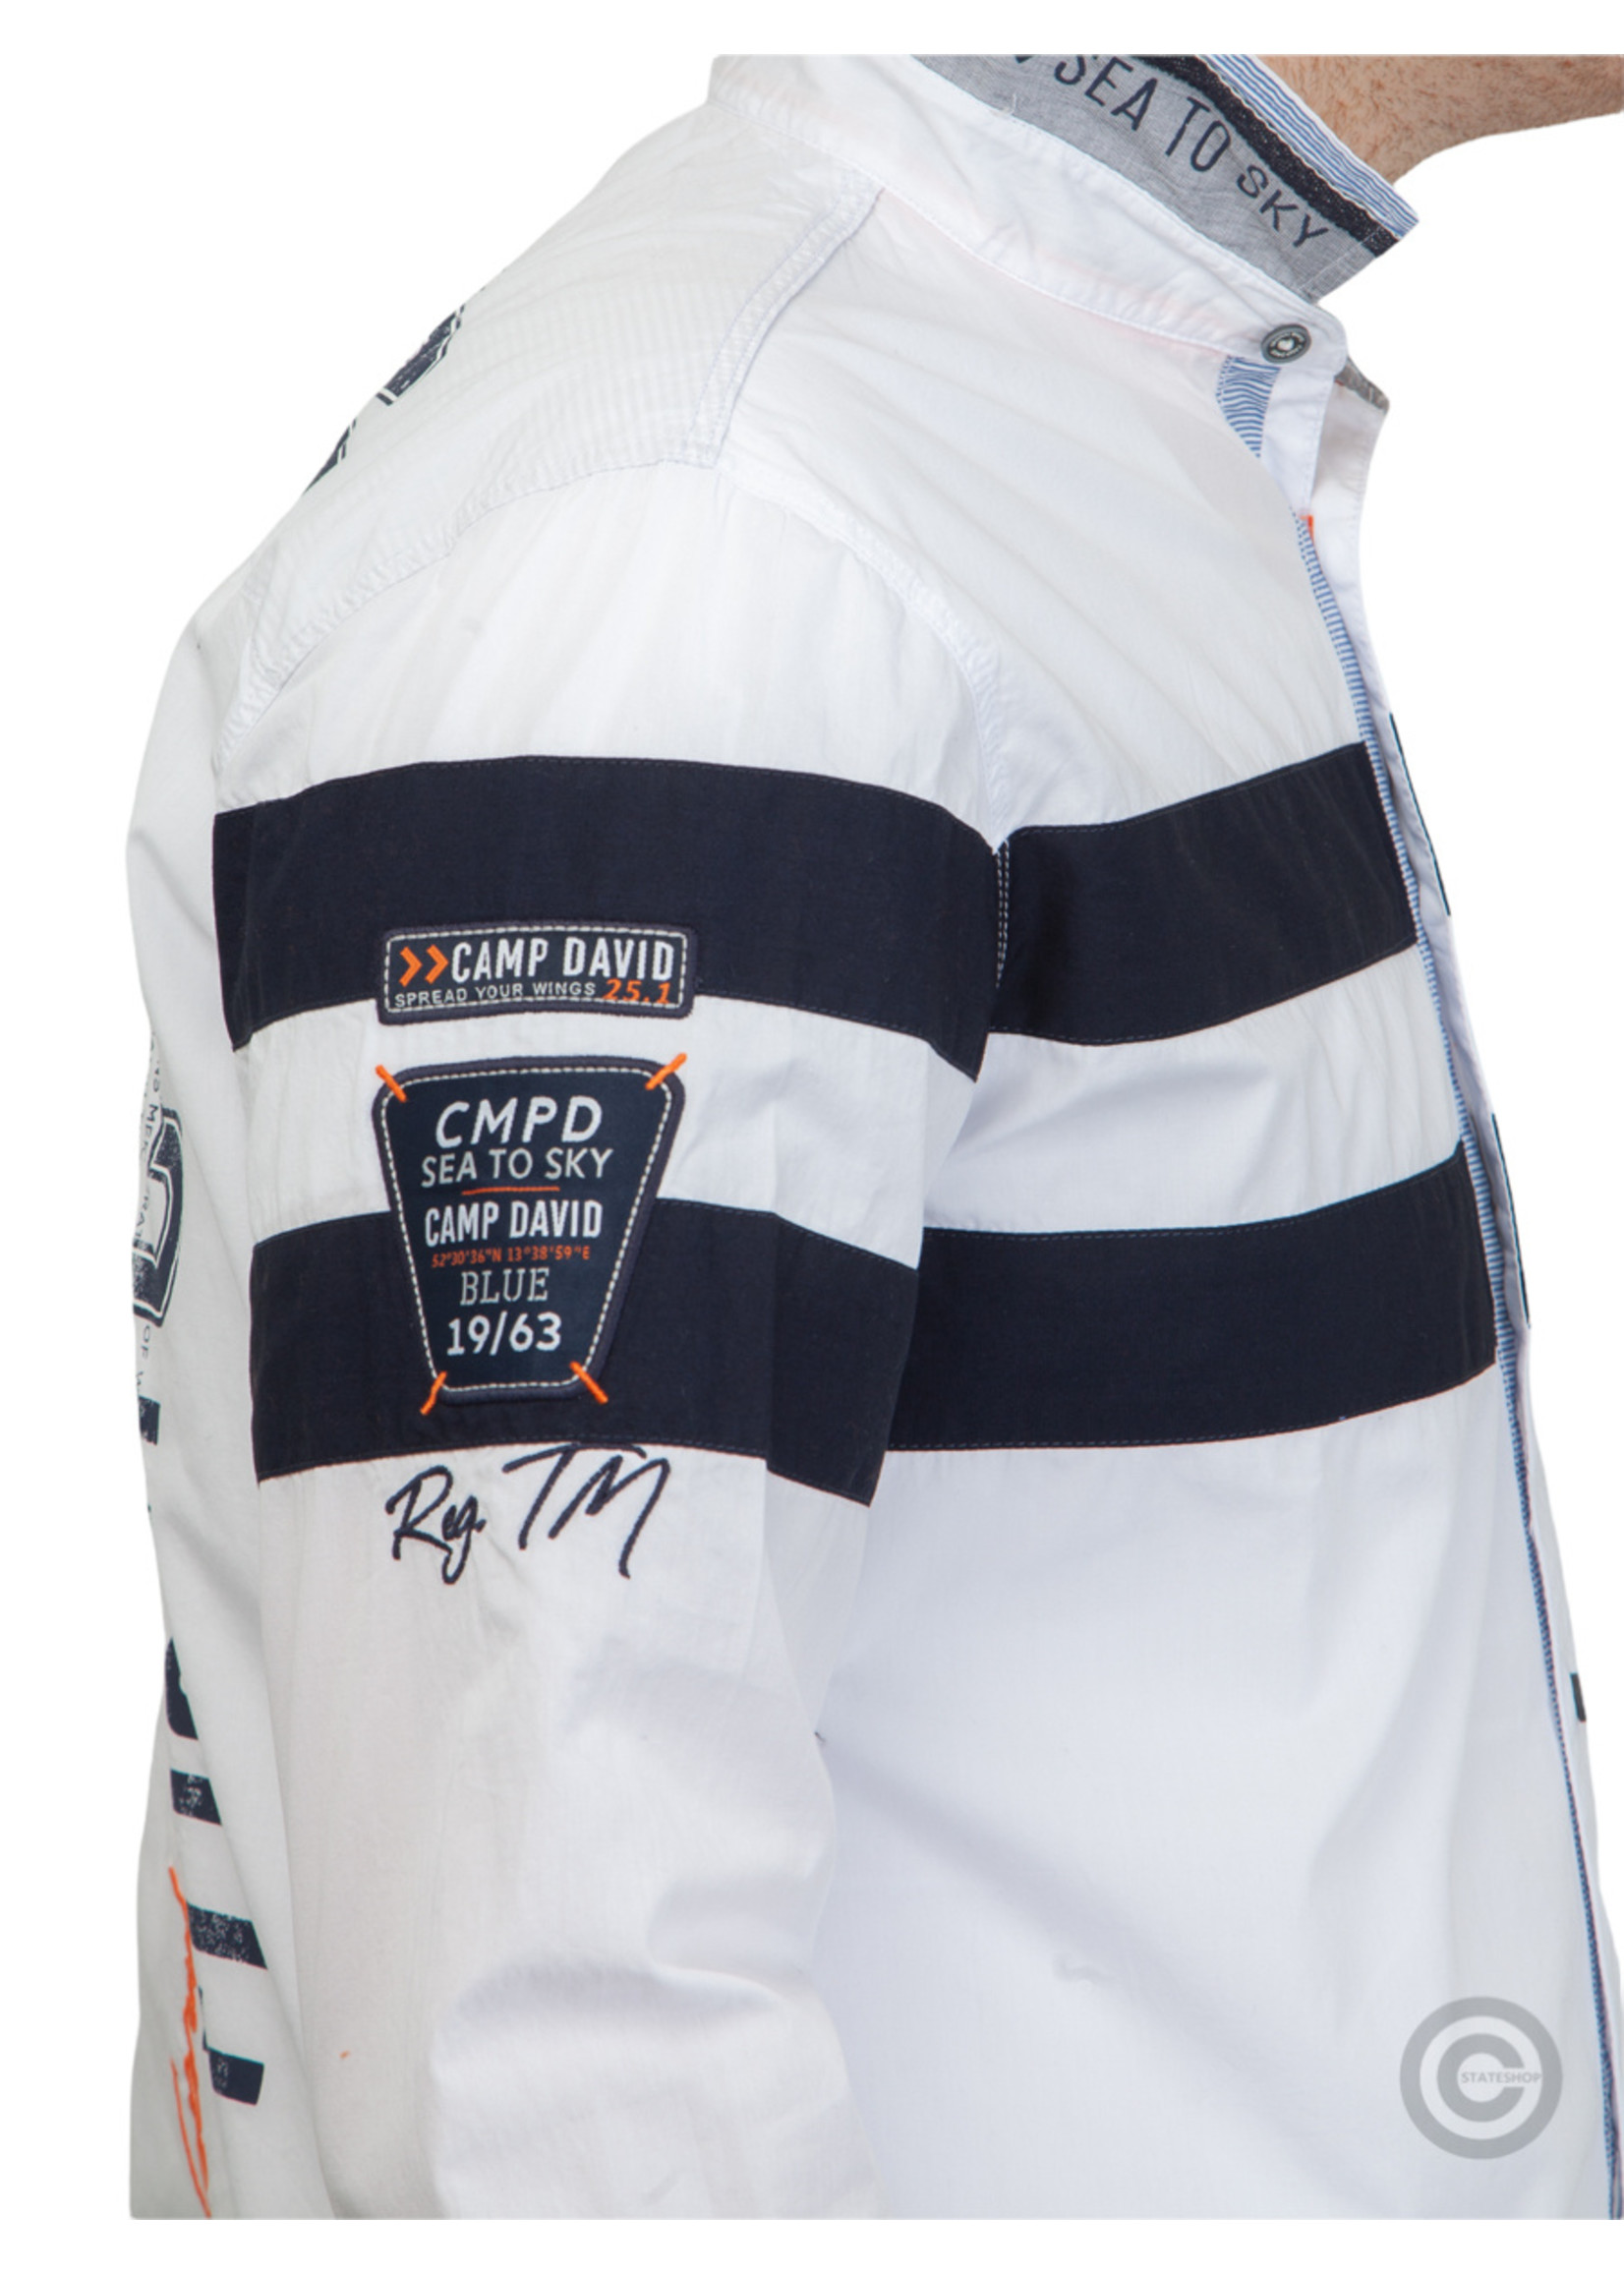 Camp David  Camp David ® shirt with stripe design and artwork on the back